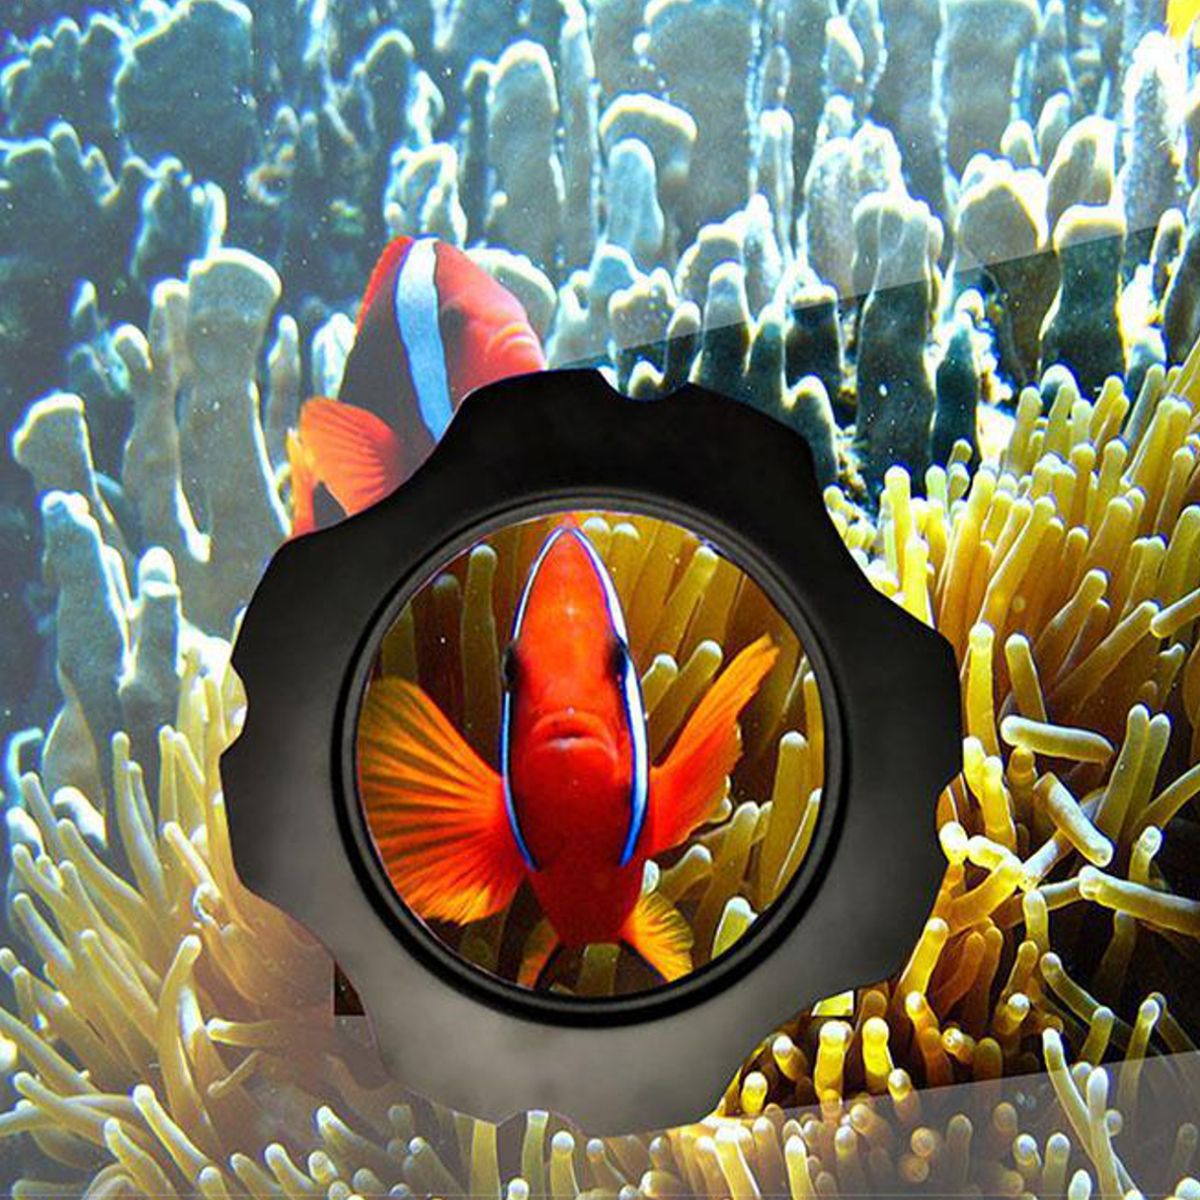 Aquarium-Magnetic-Fish-Tank-Glass-Cleaner-Scraper-Magnifier-Up-to-15mm-1352035